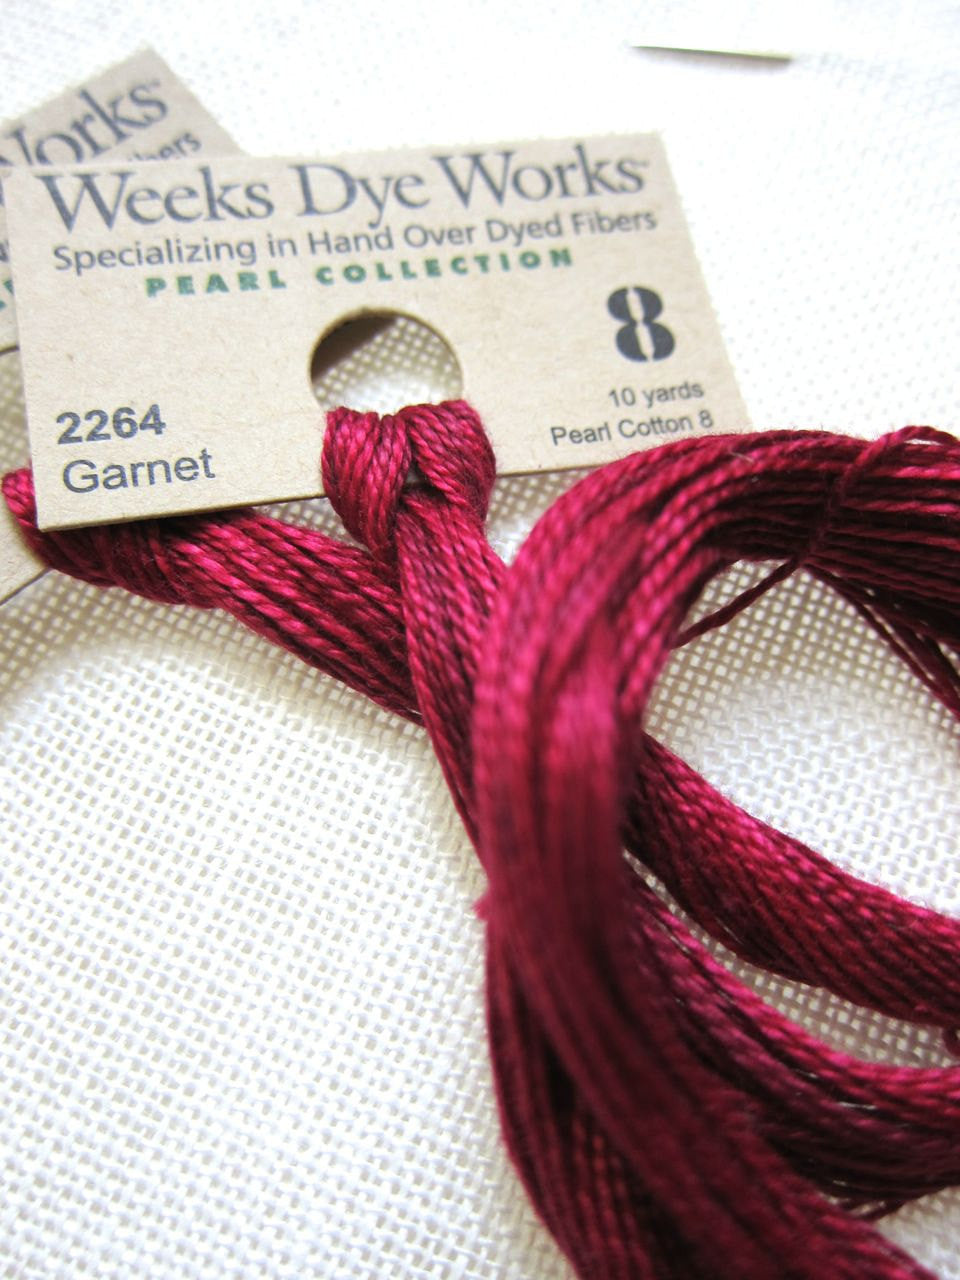 Weeks Dye Works Pearl Cotton - Garnet (Size 8) Perle Cotton - Snuggly Monkey